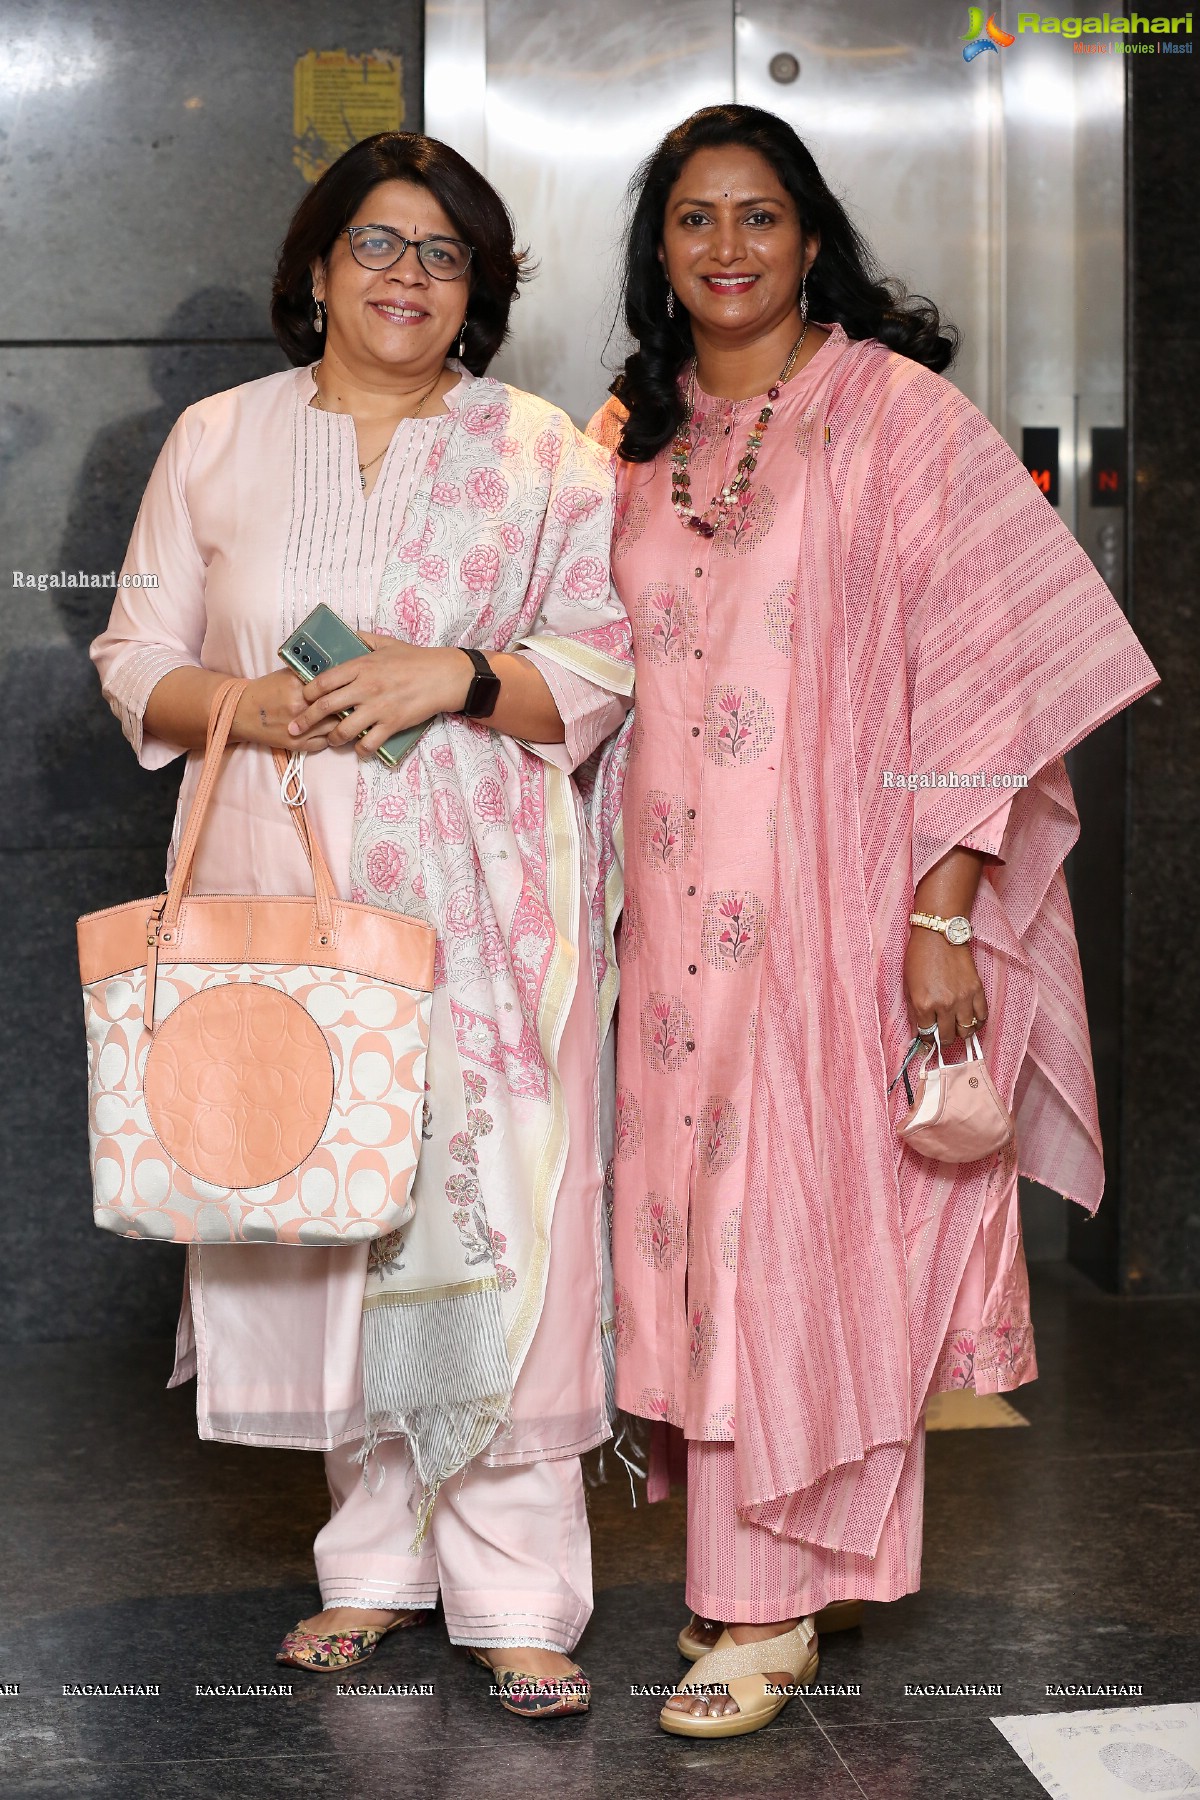 IIID-HRC International Women’s Day Celebrations at Taj Mahal Hotel - 'Lets Rendezvous'